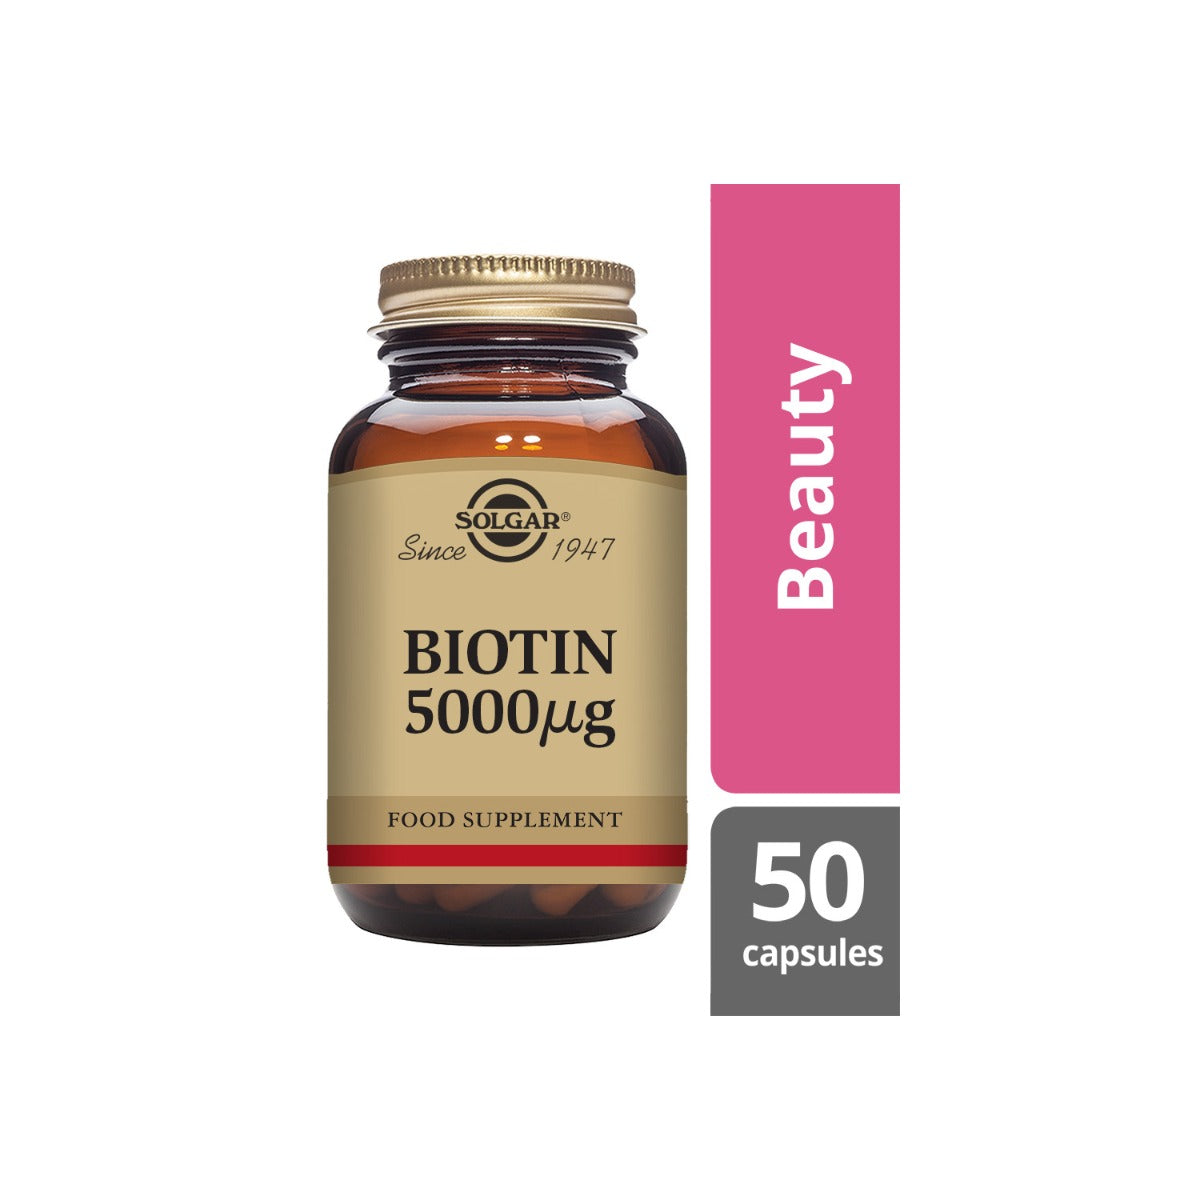 Solgar® Biotin 5000 µg Vegetable Capsules - 50 Pack